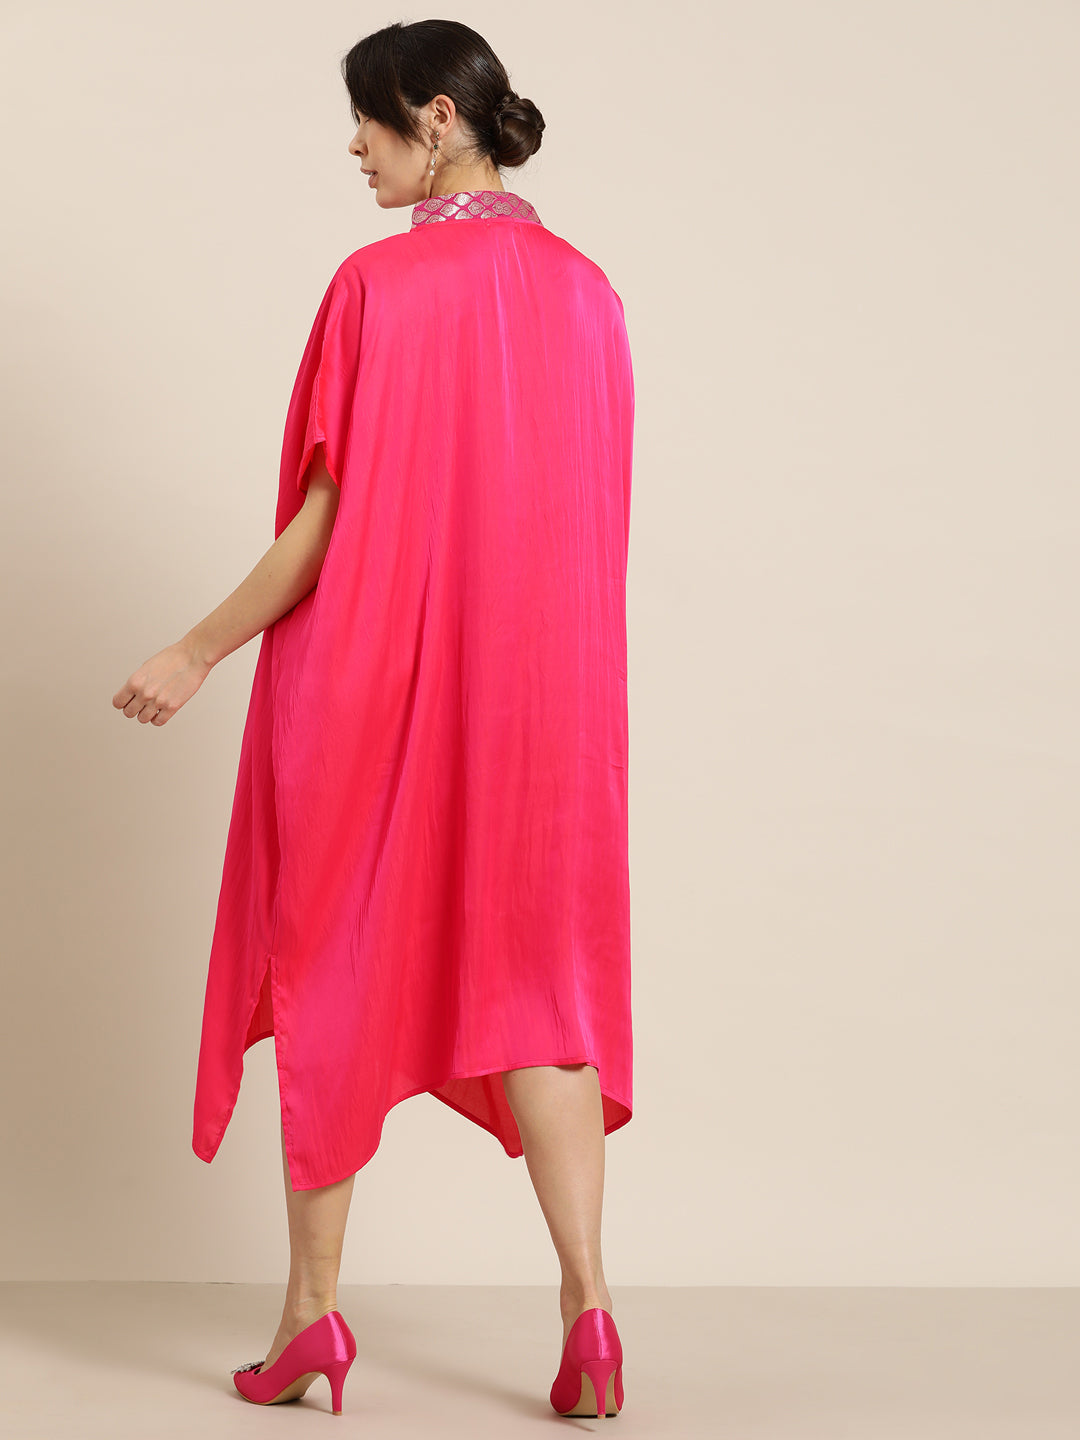 Fuchia pink silk Kimono dress with brocade